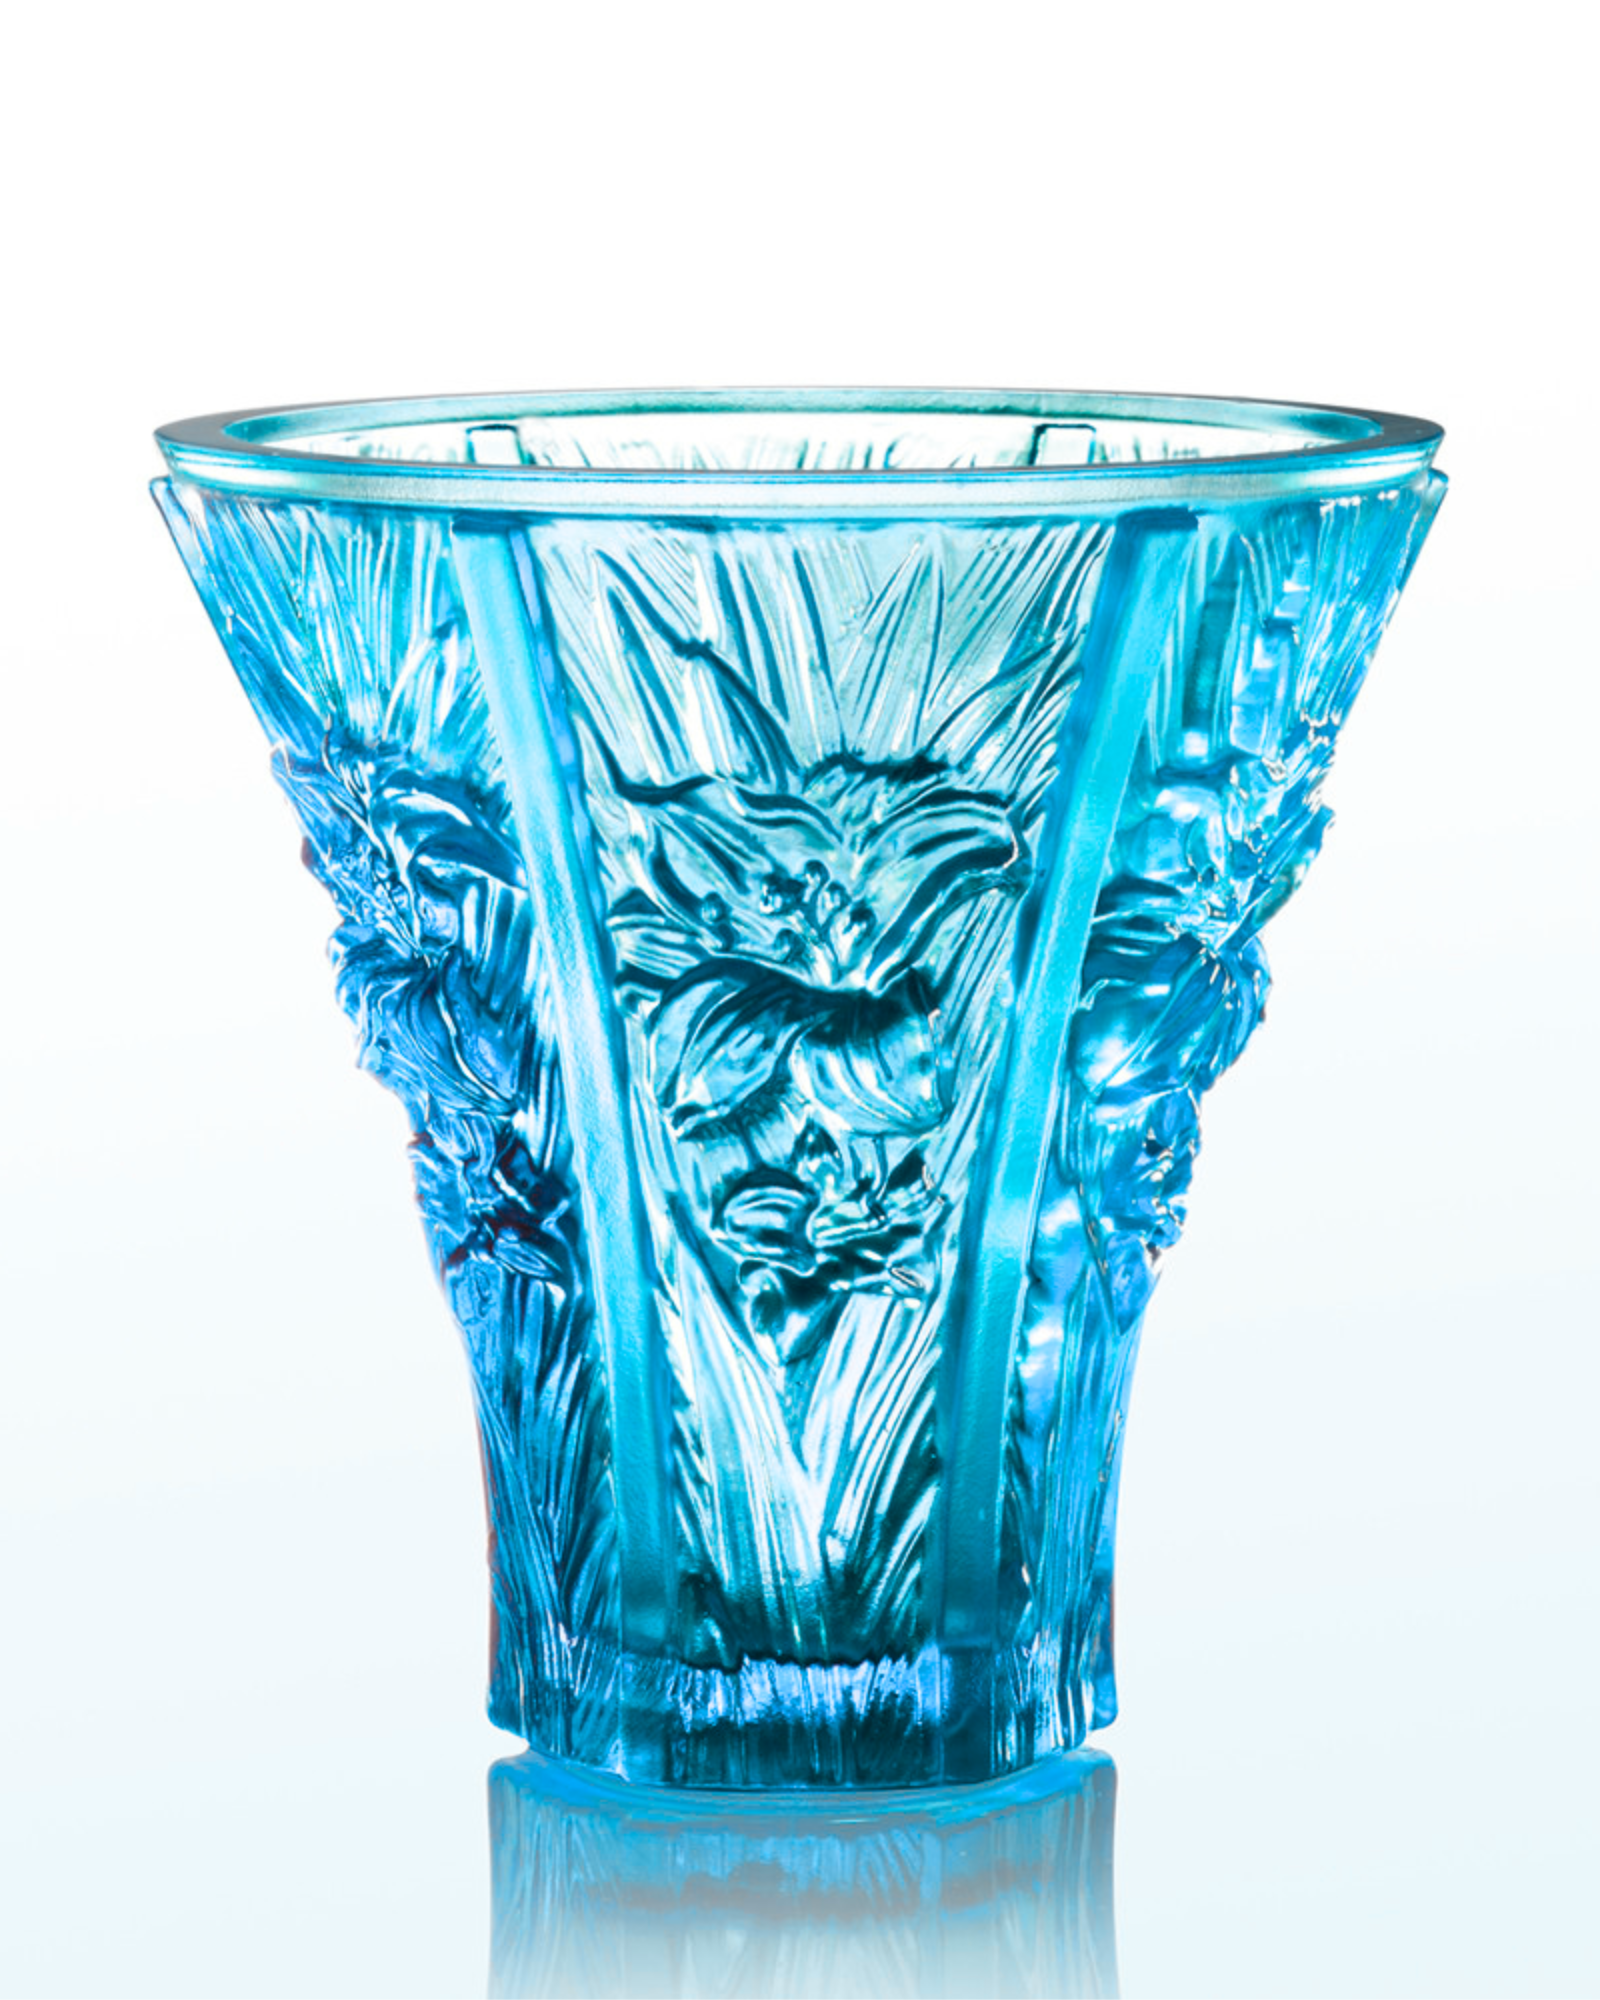 LIULI Crystal Art Crystal Floral Vase, "Profusion of Lilies"